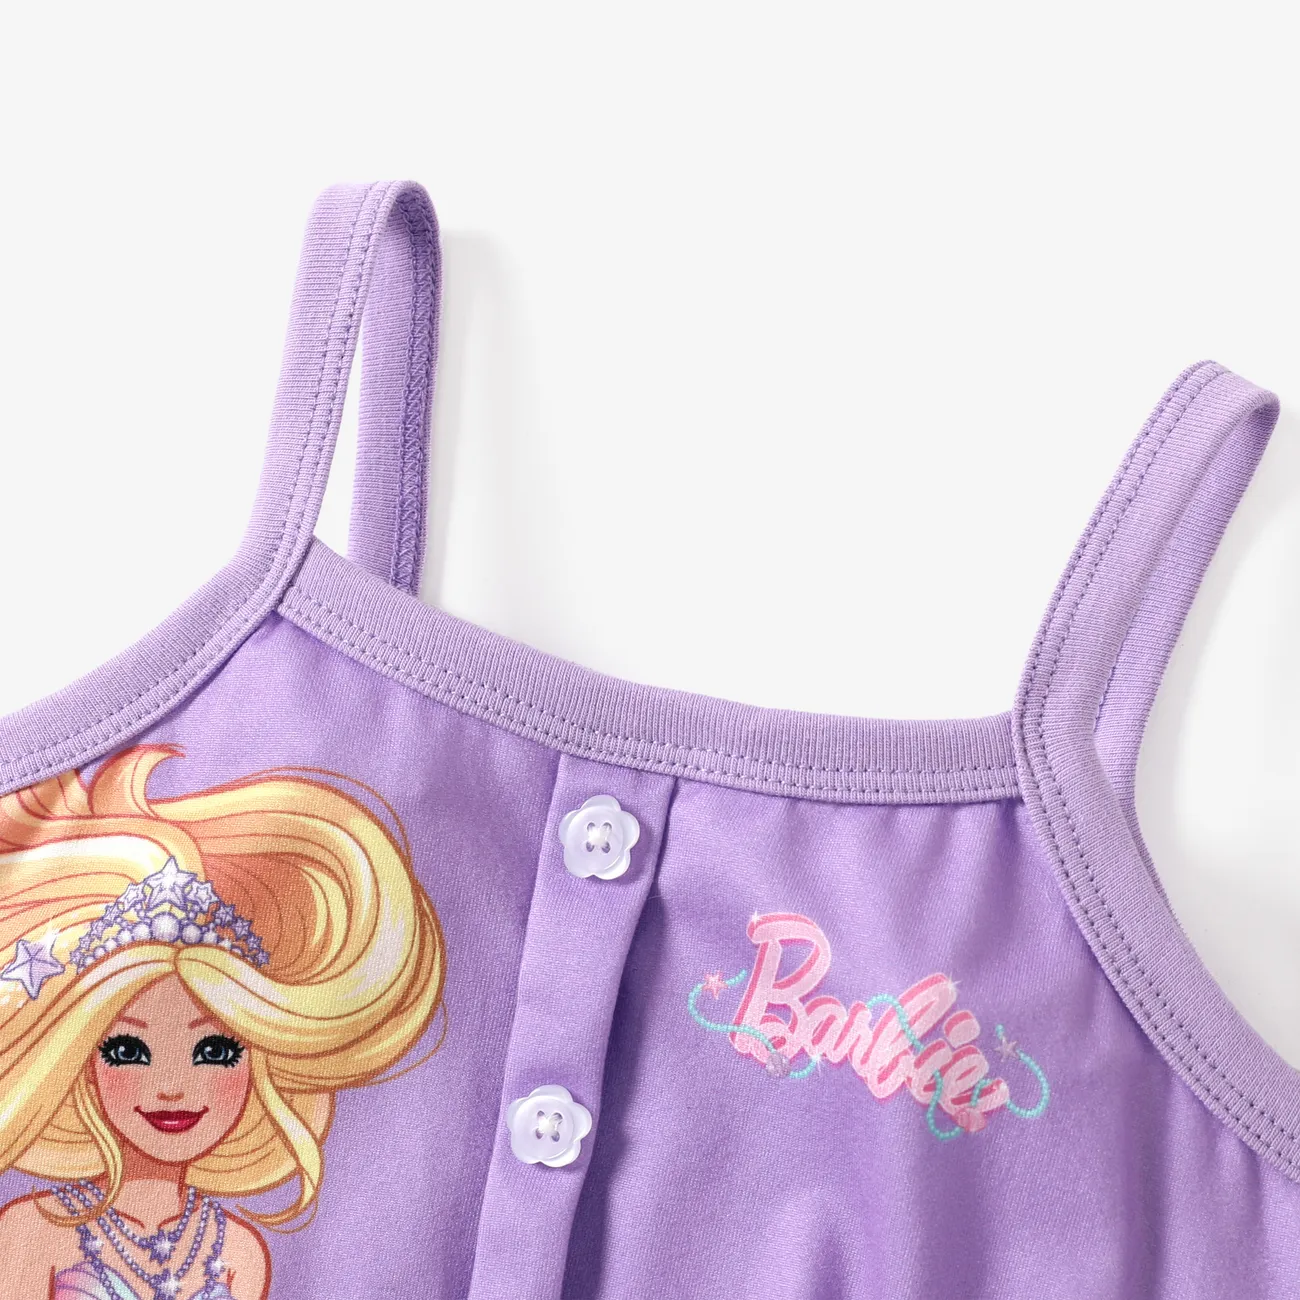 Barbie بدلة تنورة 2 - 6 سنوات حريمي توب بحمالات قوس قزح متعدد الألوان big image 1